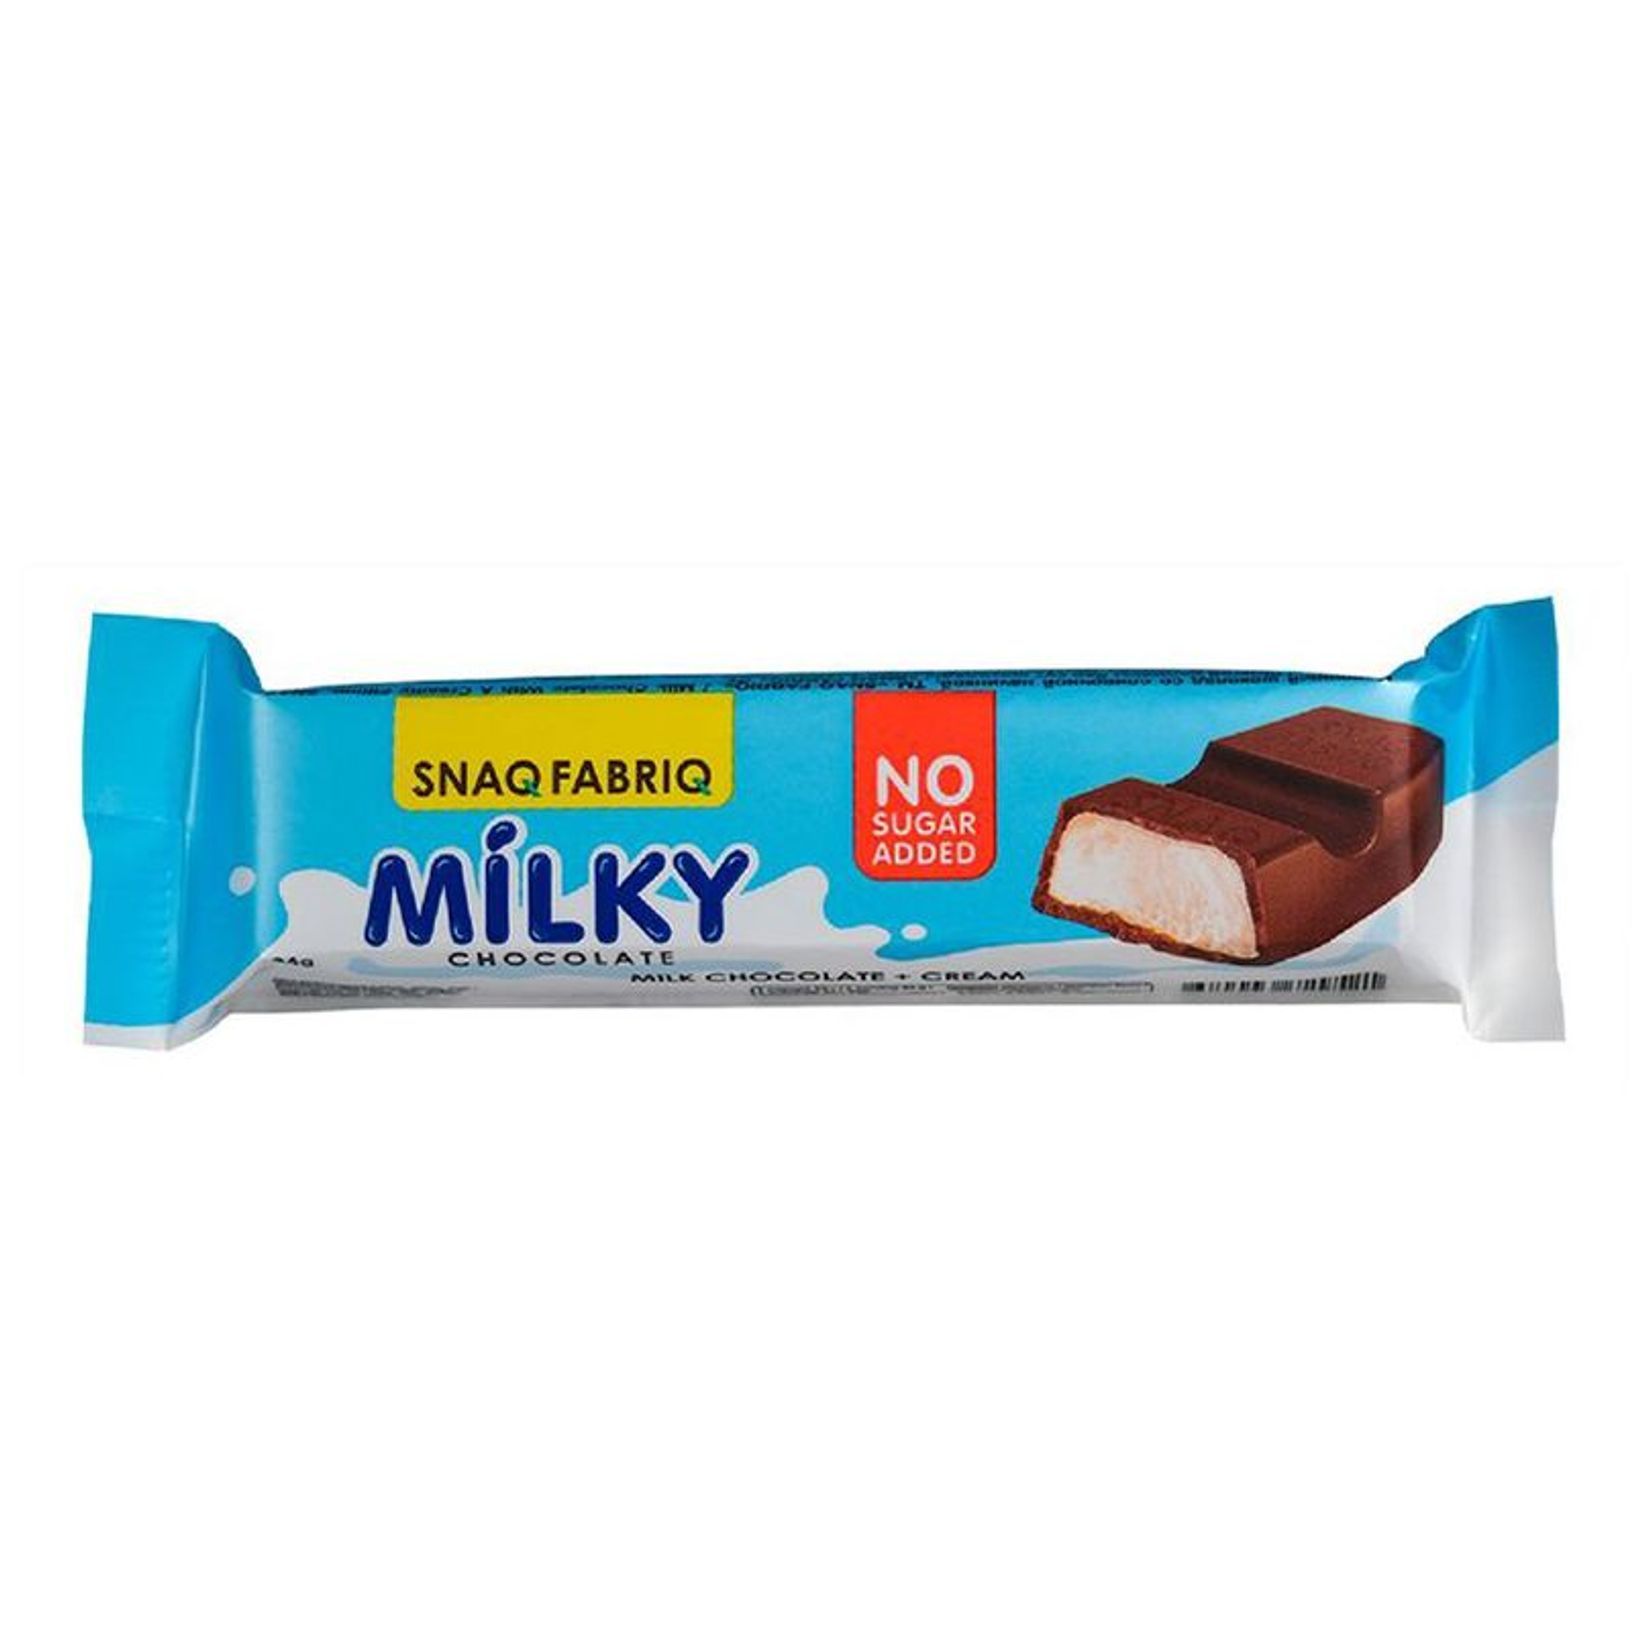 Snaq fabriq батончик шоколад. Батончики Snaq Fabriq Milky. Snaq Fabric Milky шоколад. Snaq Fabriq молочный шоколад 34 гр. Молочный шоколад со сливочной начинкой ТМ Snaq Fabriq 34 г х 40.